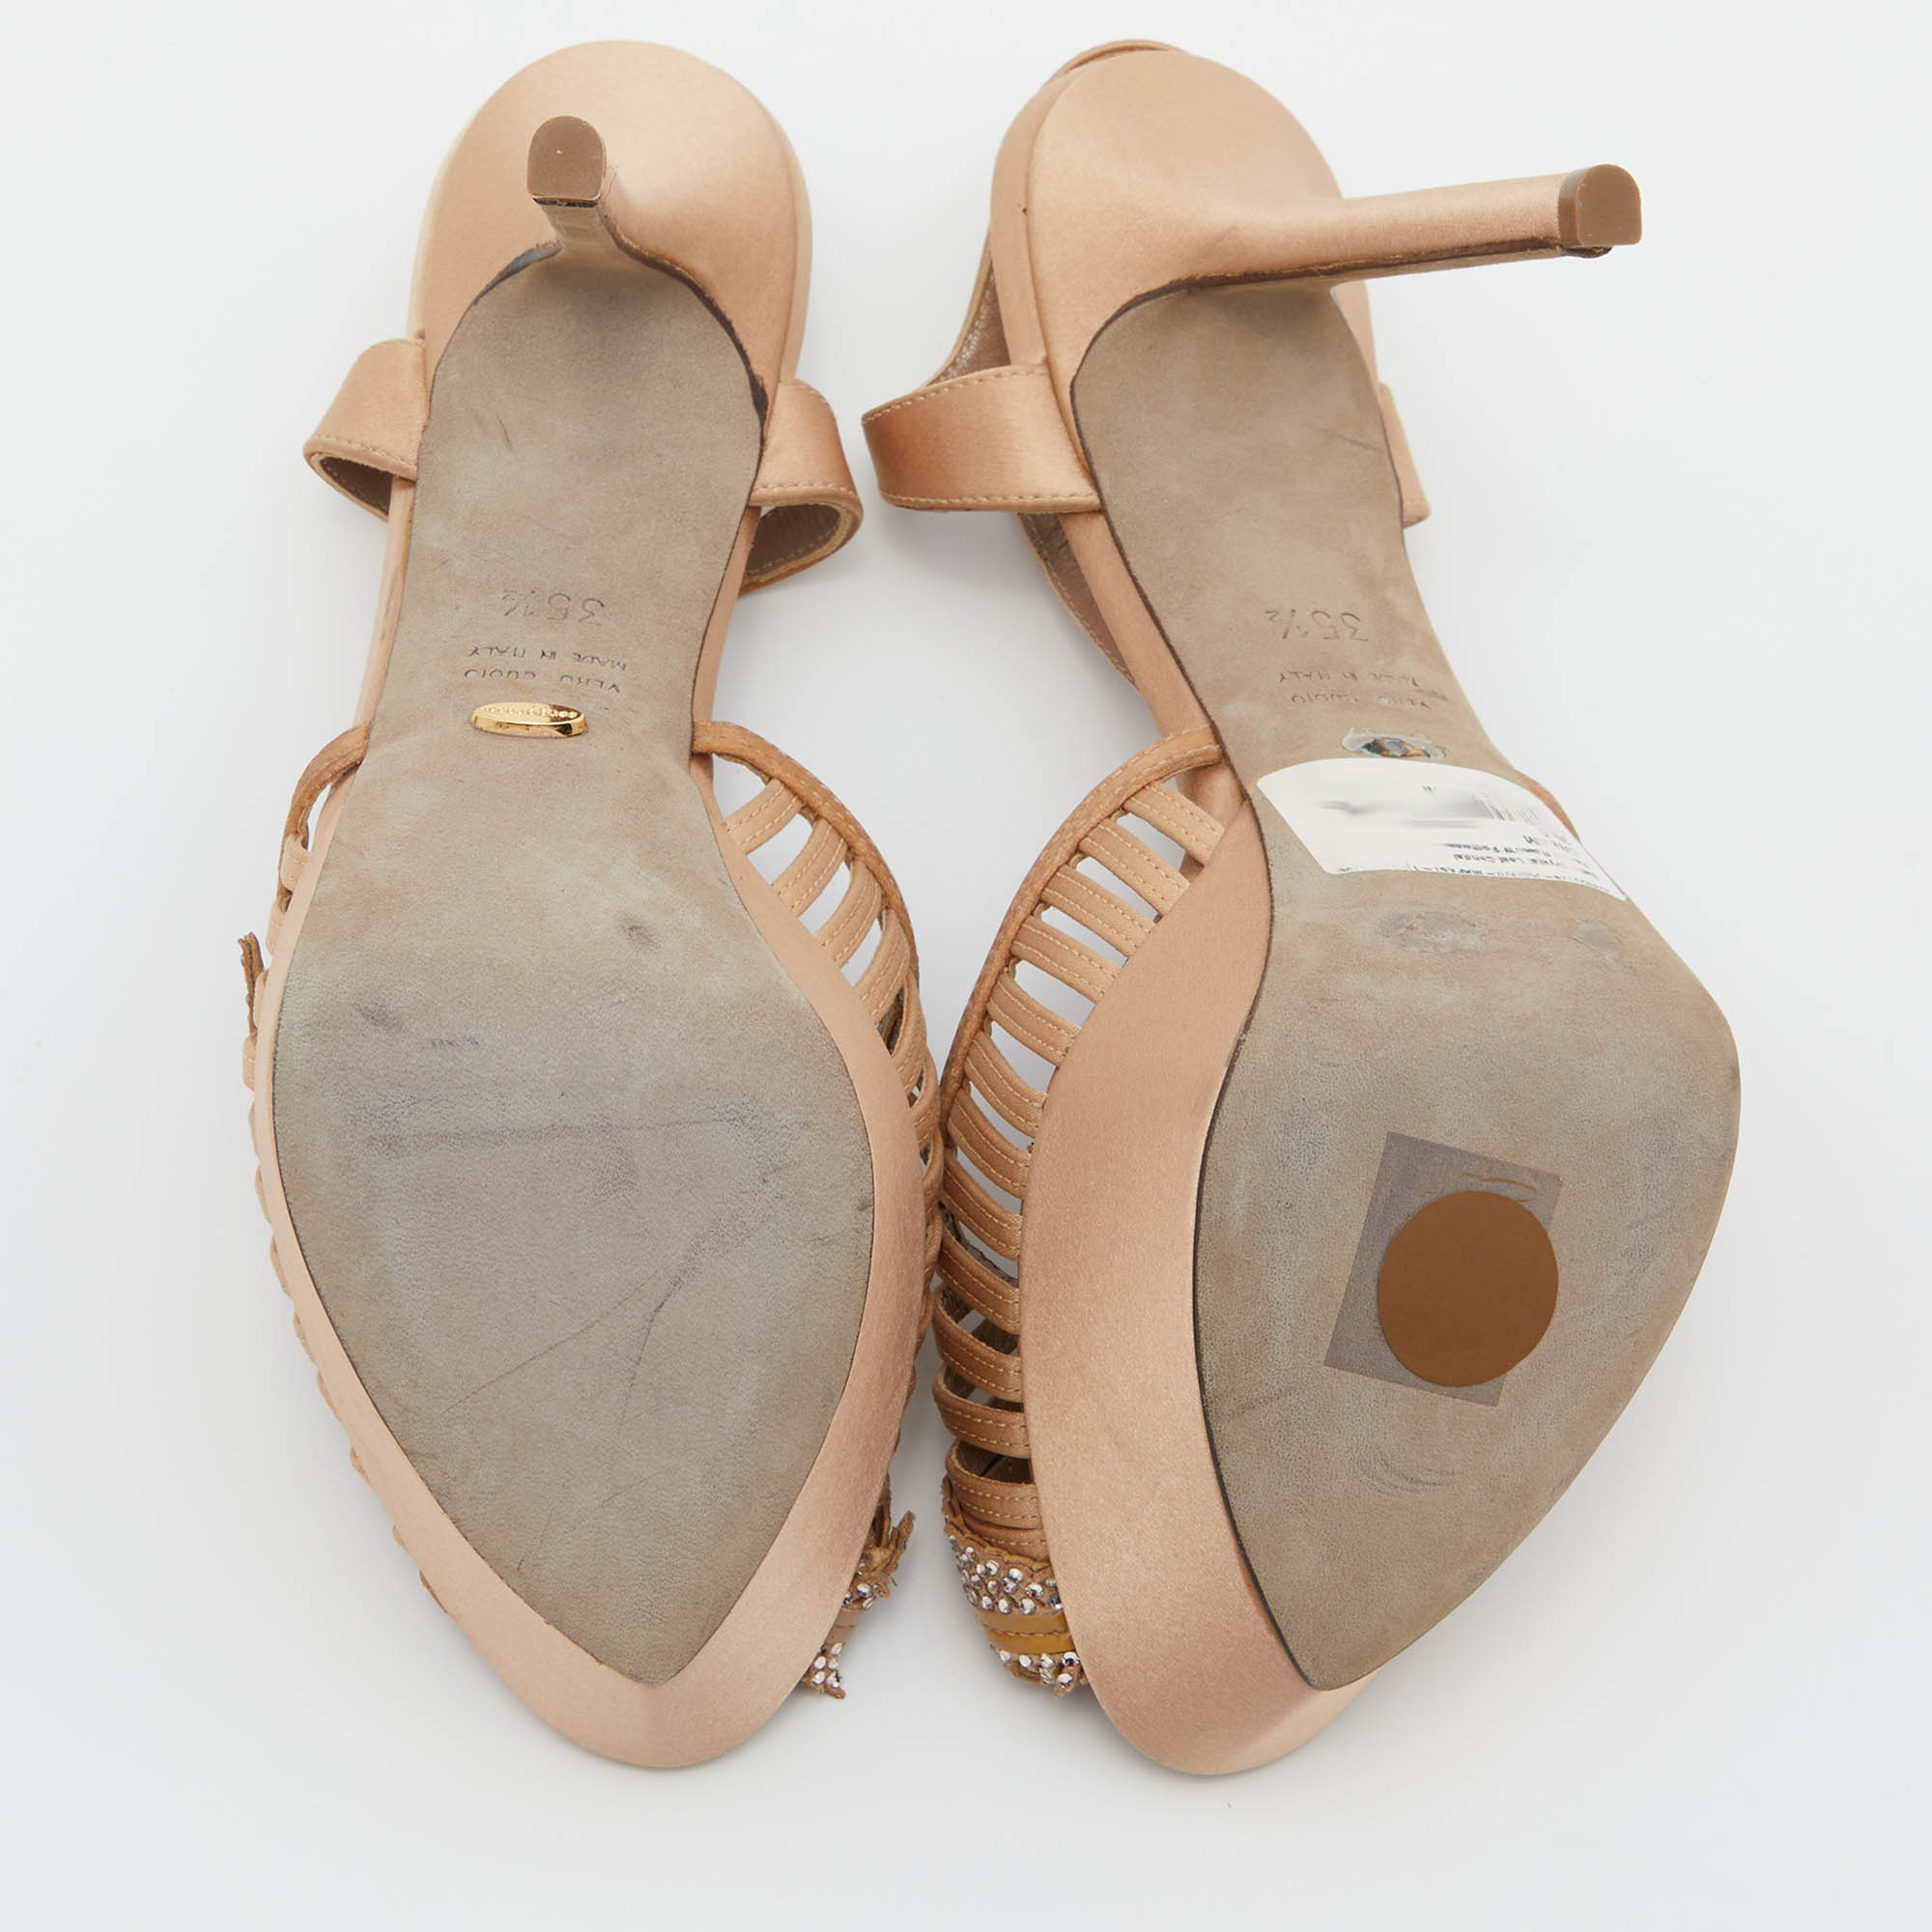 Sergio Rossi Light Brown Satin Crystal Embellished Ankle Strap Sandals Size 35.5